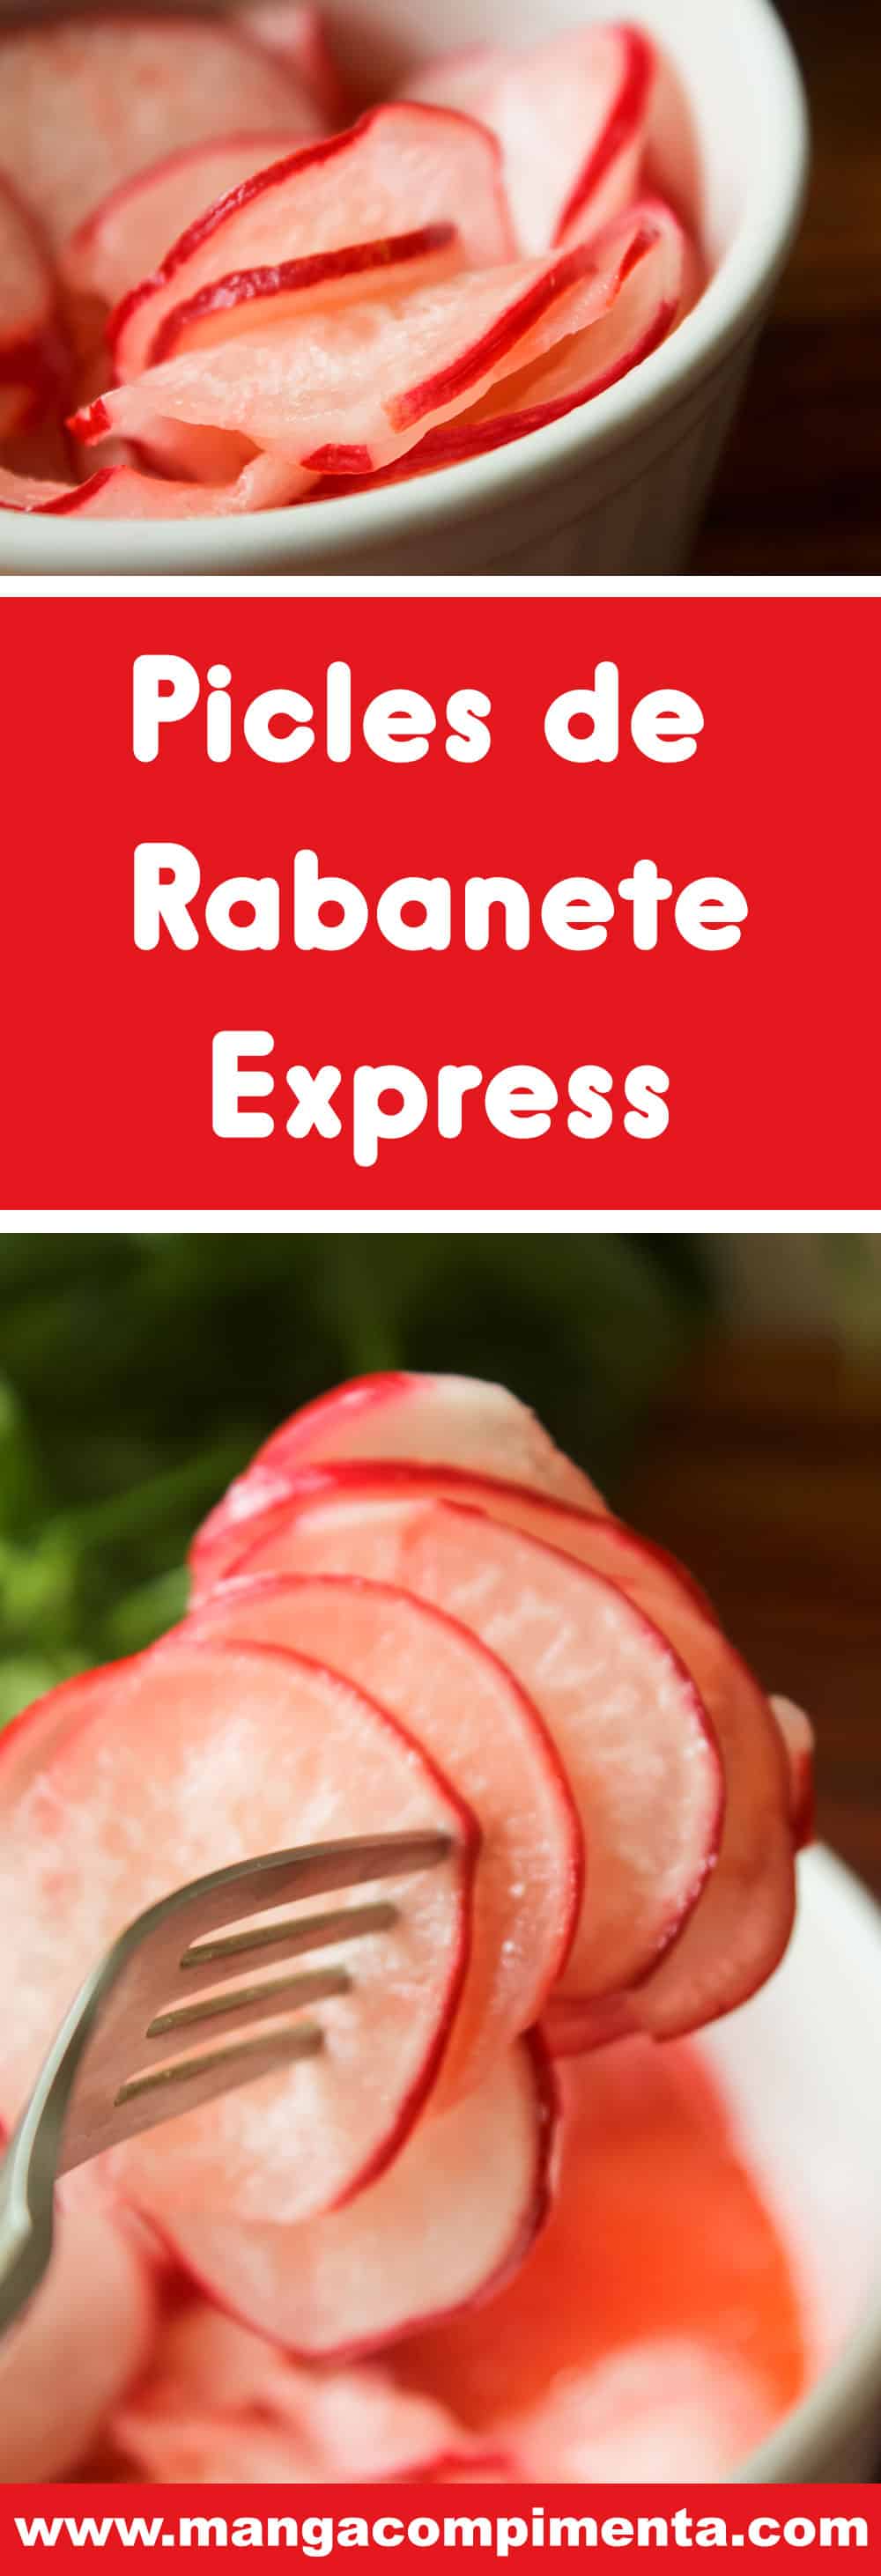 Receita de Picles de Rabanetes Express - prepare para servir na salada ou para acompanhar o lanche no final da tarde!